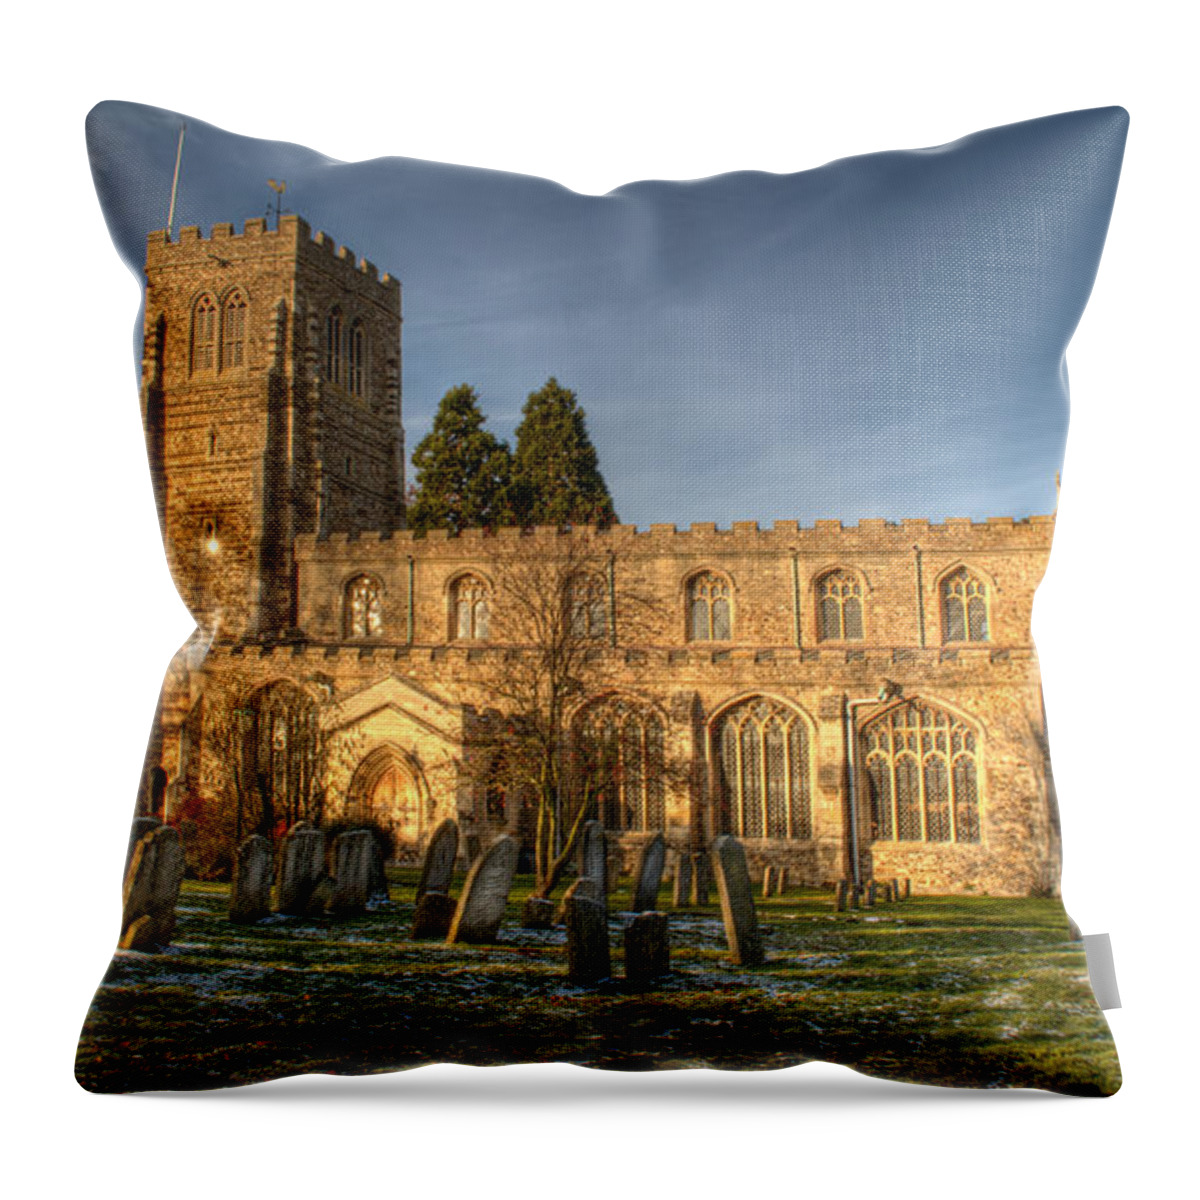 St Marys Church Throw Pillow featuring the photograph St Marys Church Eaton Socon by Chris Thaxter